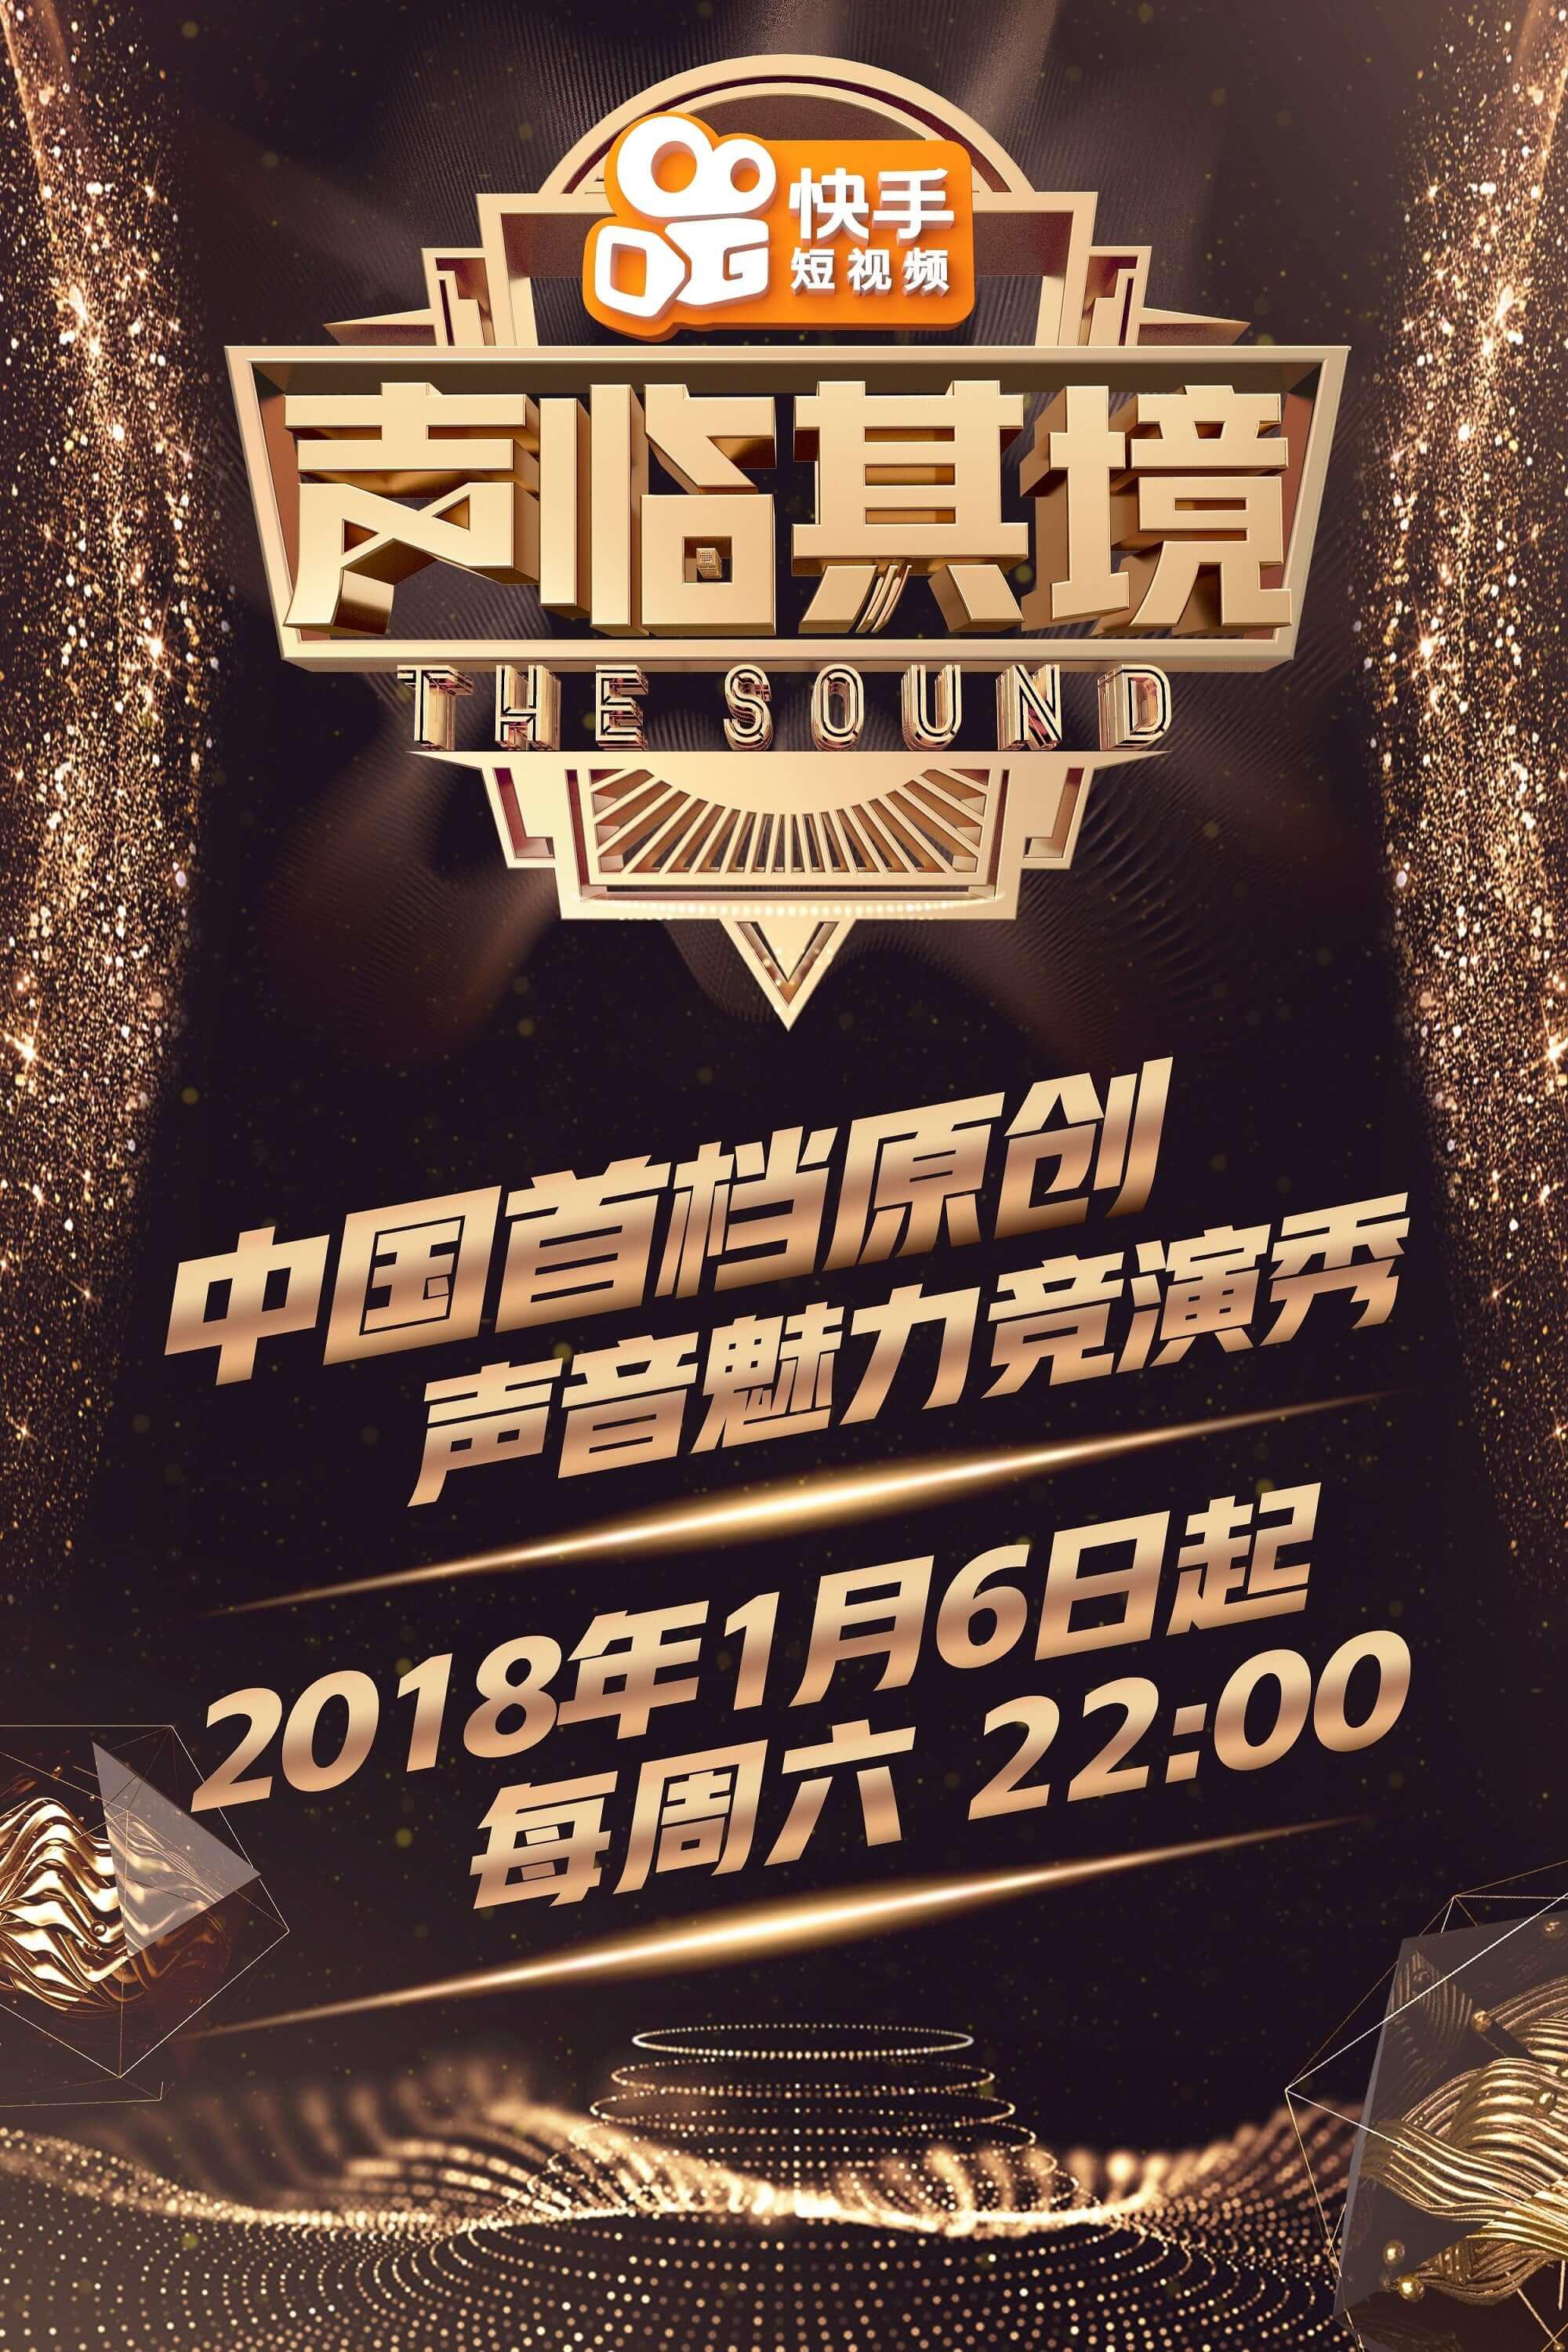 TV ratings for The Sound (声临其境) in South Korea. Hunan TV TV series